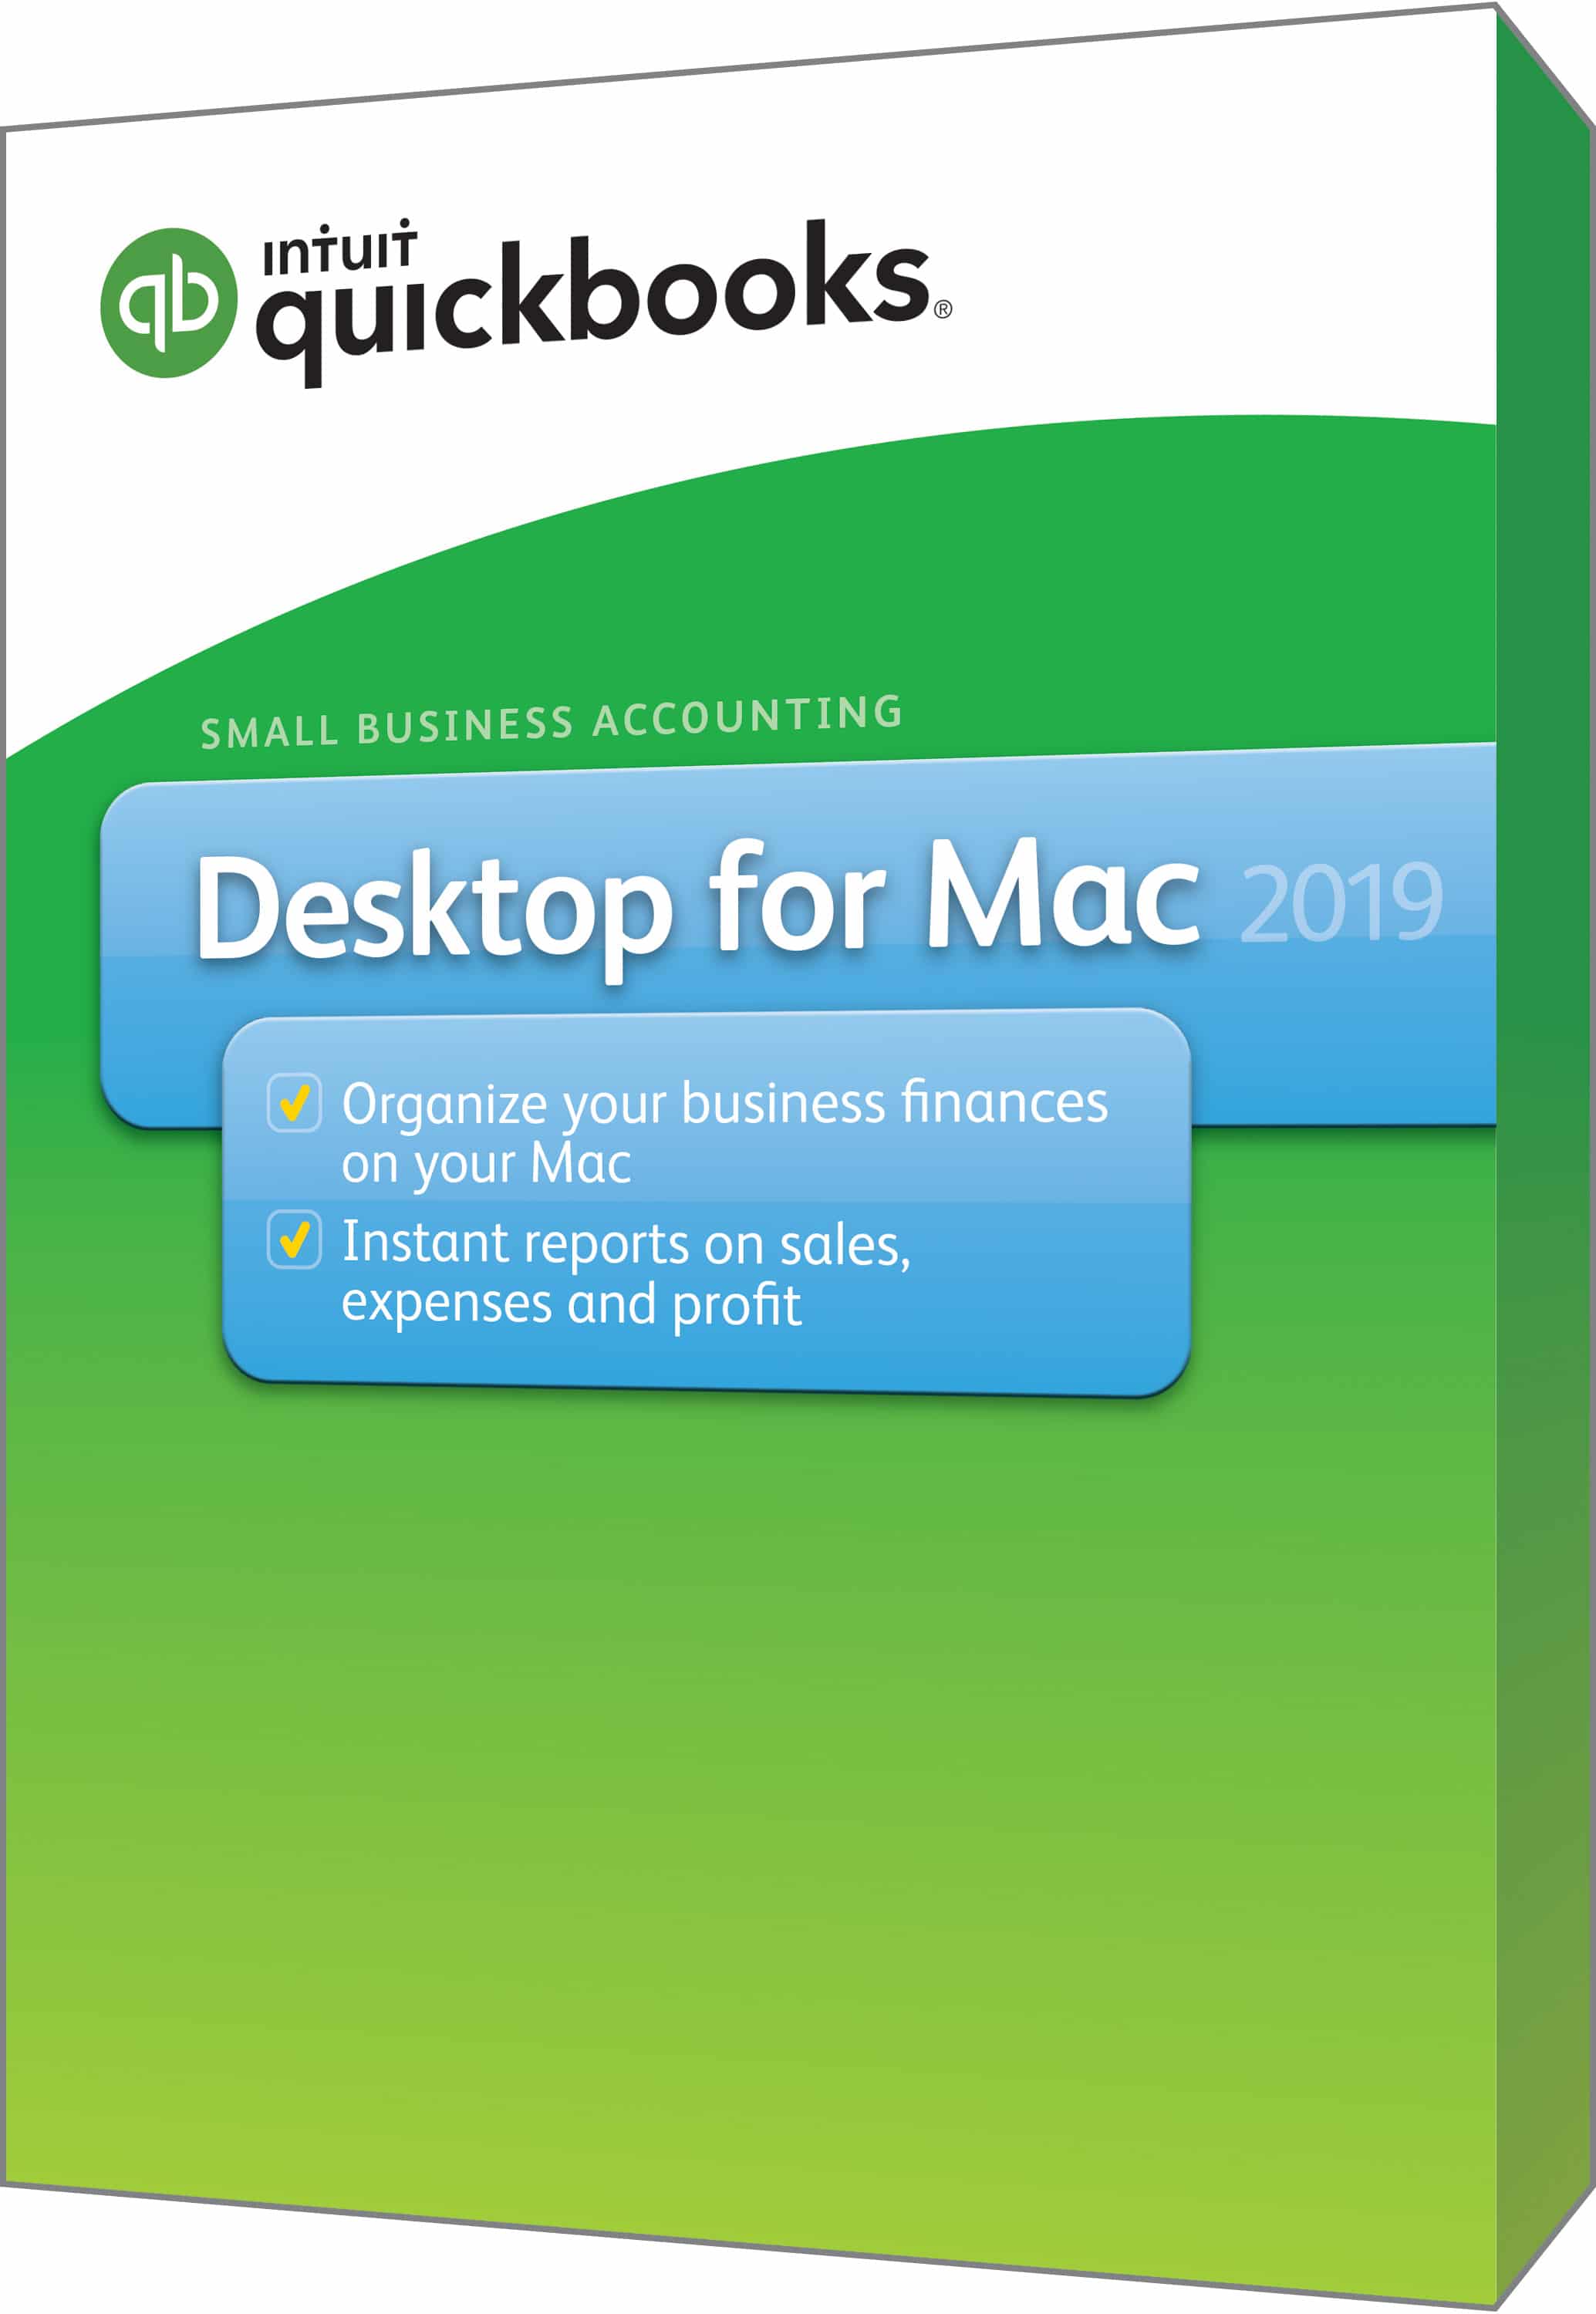 quickbooks for mac free trial